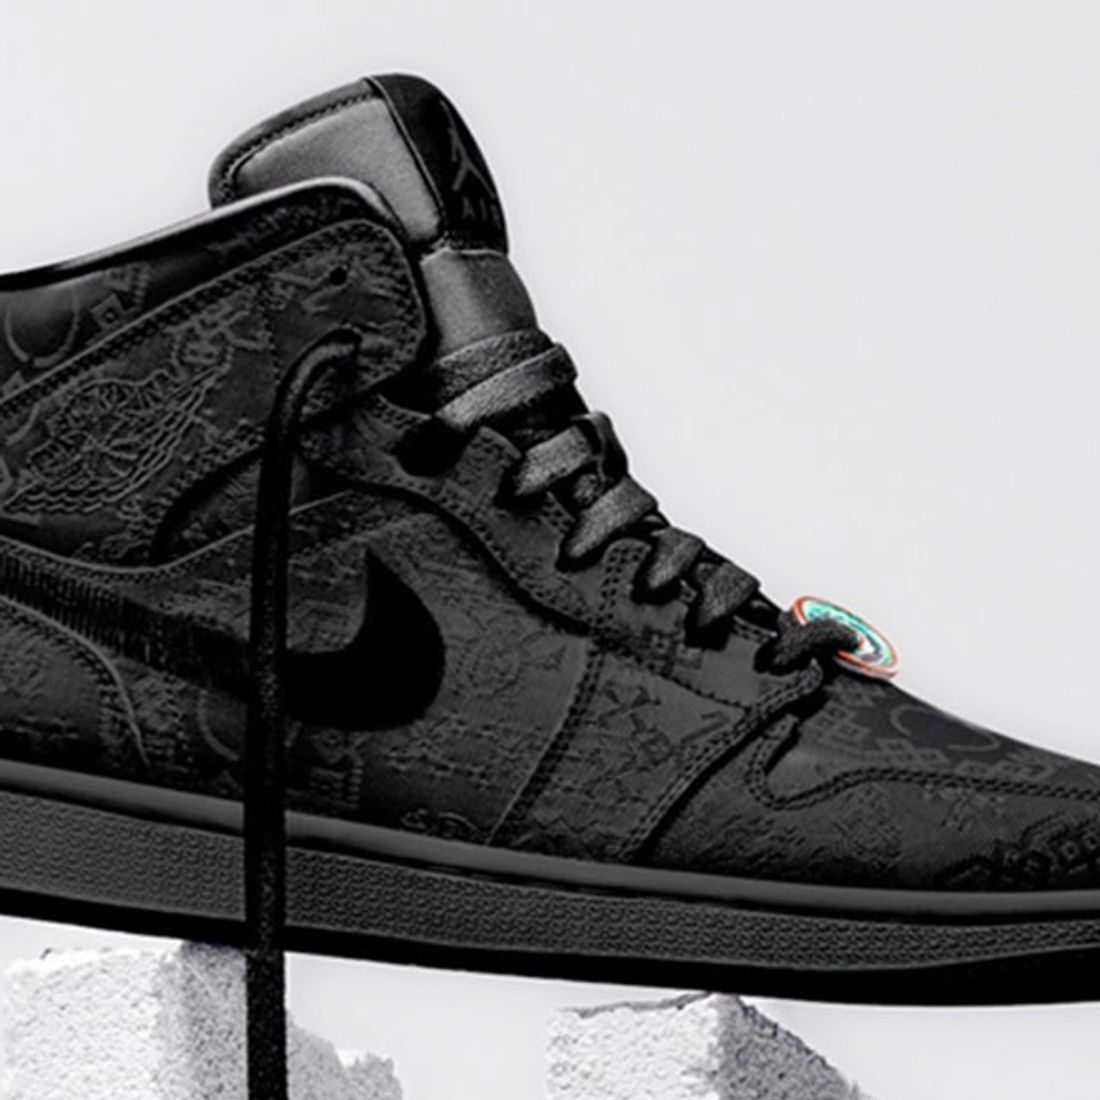 dilema paquete sostén The CLOT x Air Jordan 1 is Here for Black Friday - Sneaker Freaker